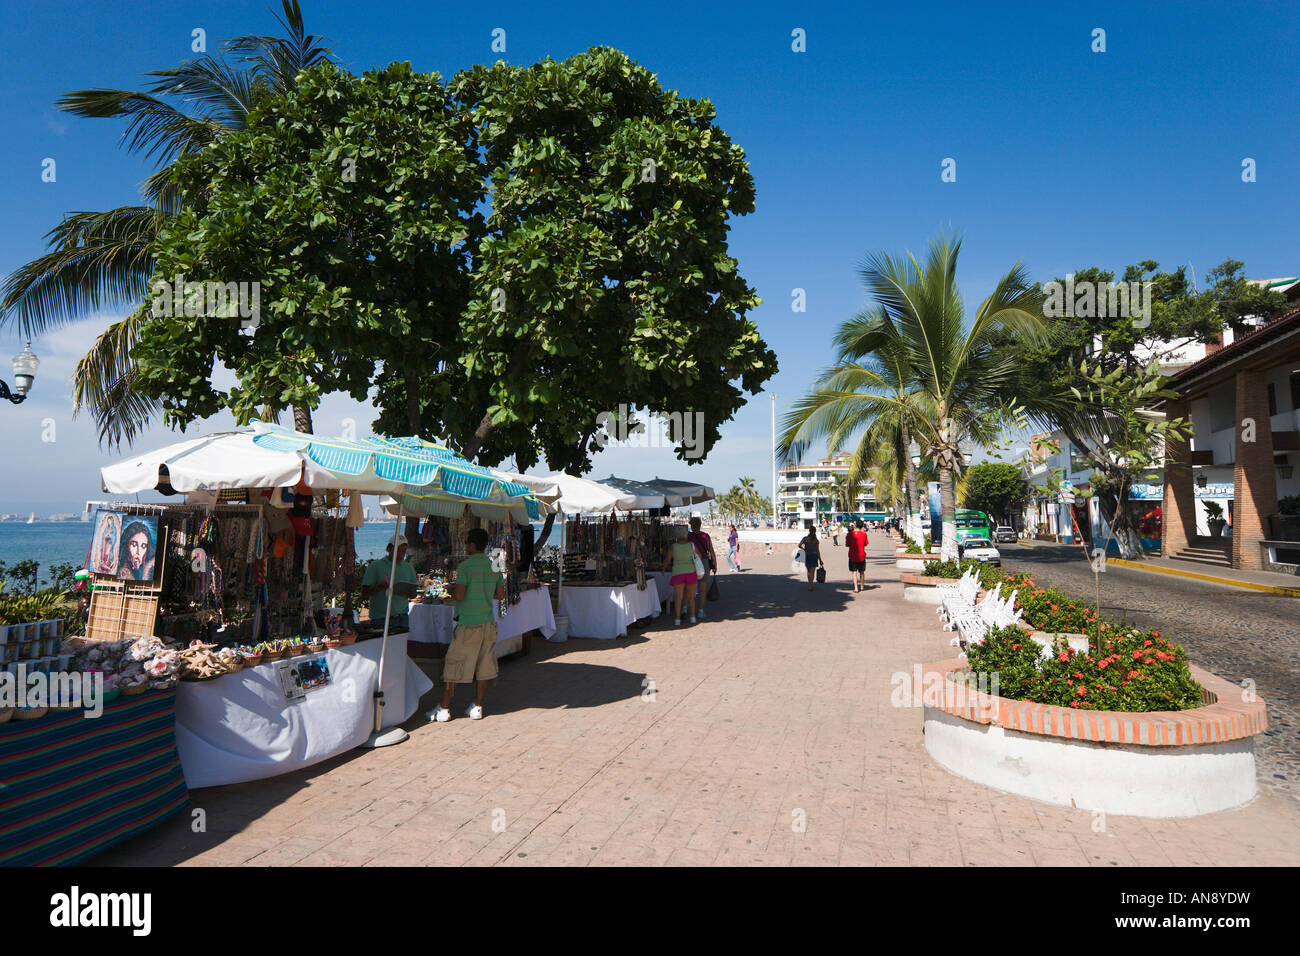 Seafront Market Stalls, Malecon, Old Town, Puerto Vallarta, Jalisco, Mexico Stock Photo